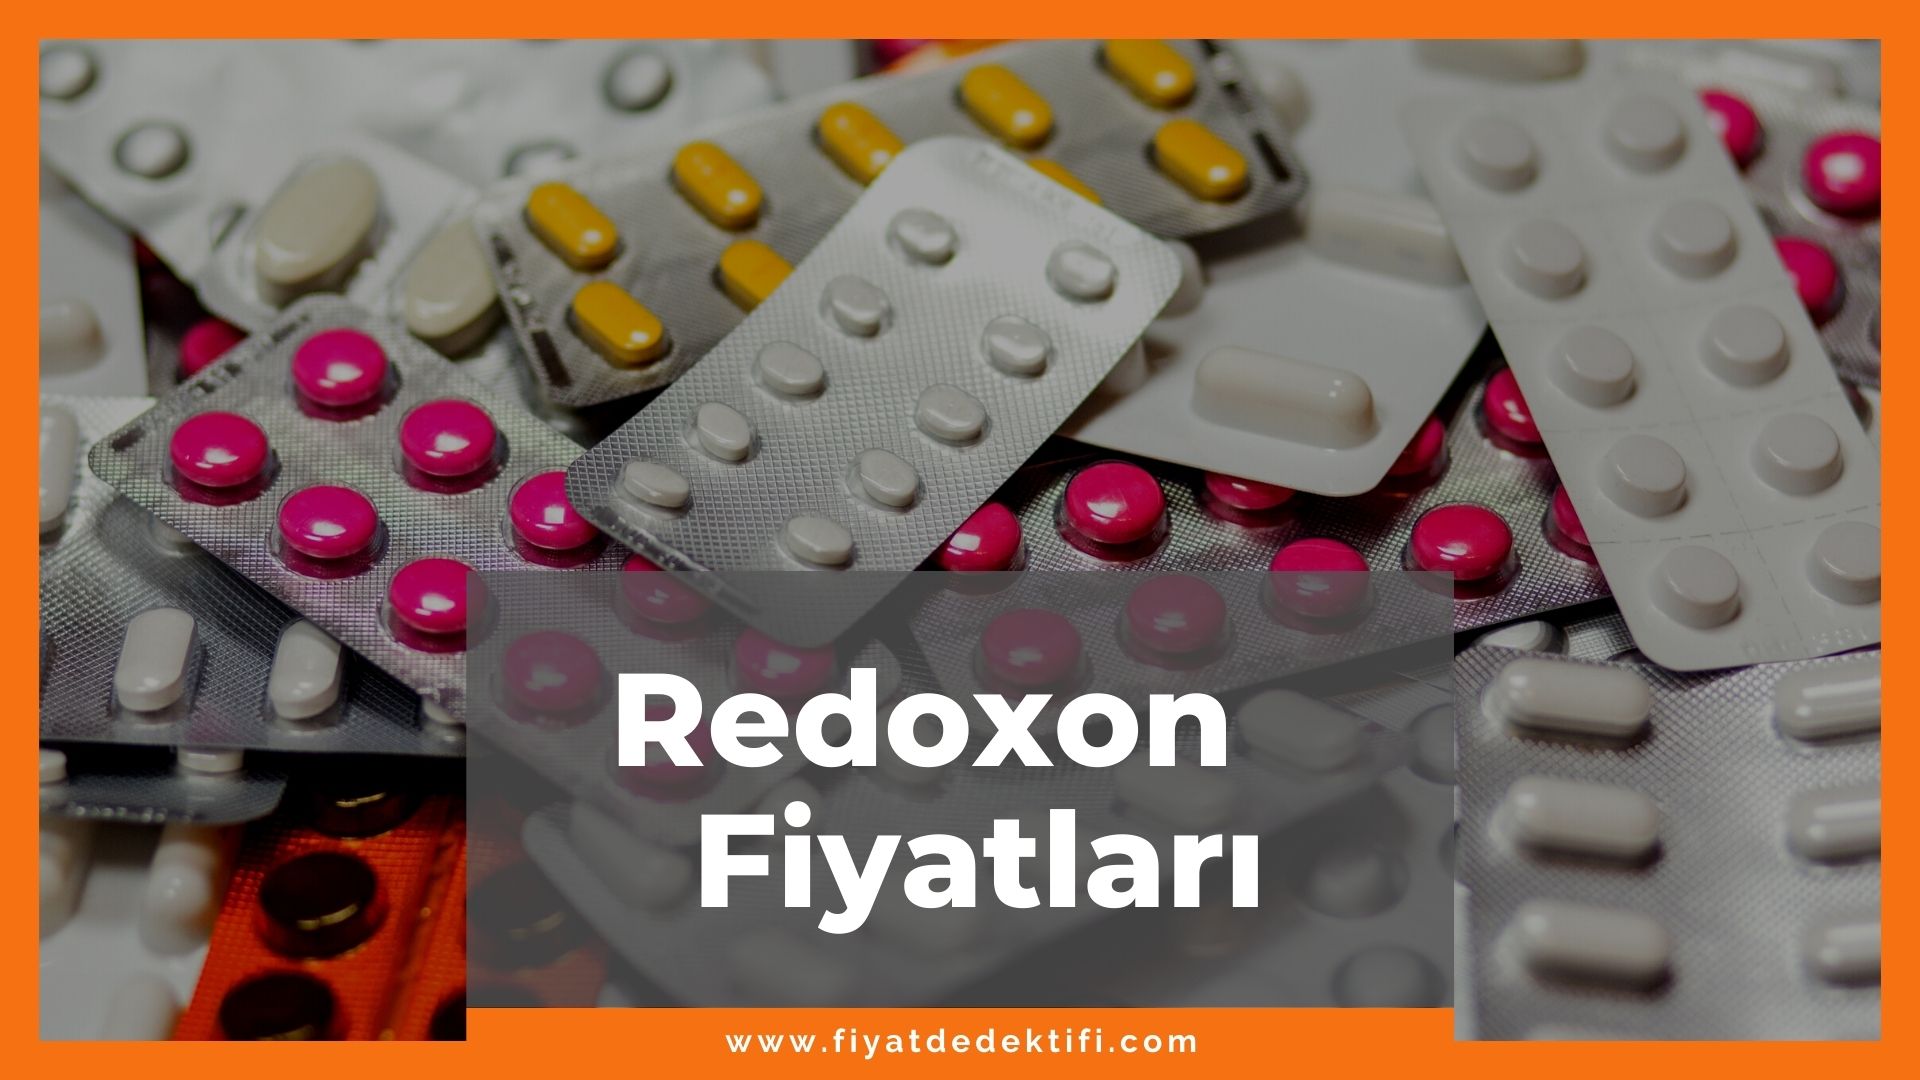 Redoxon Fiyat 2021, Redoxon Fiyatı, Redoxon C Vitamini Fiyat, redoxon d vitamini fiyat, redoxon çinko fiyat